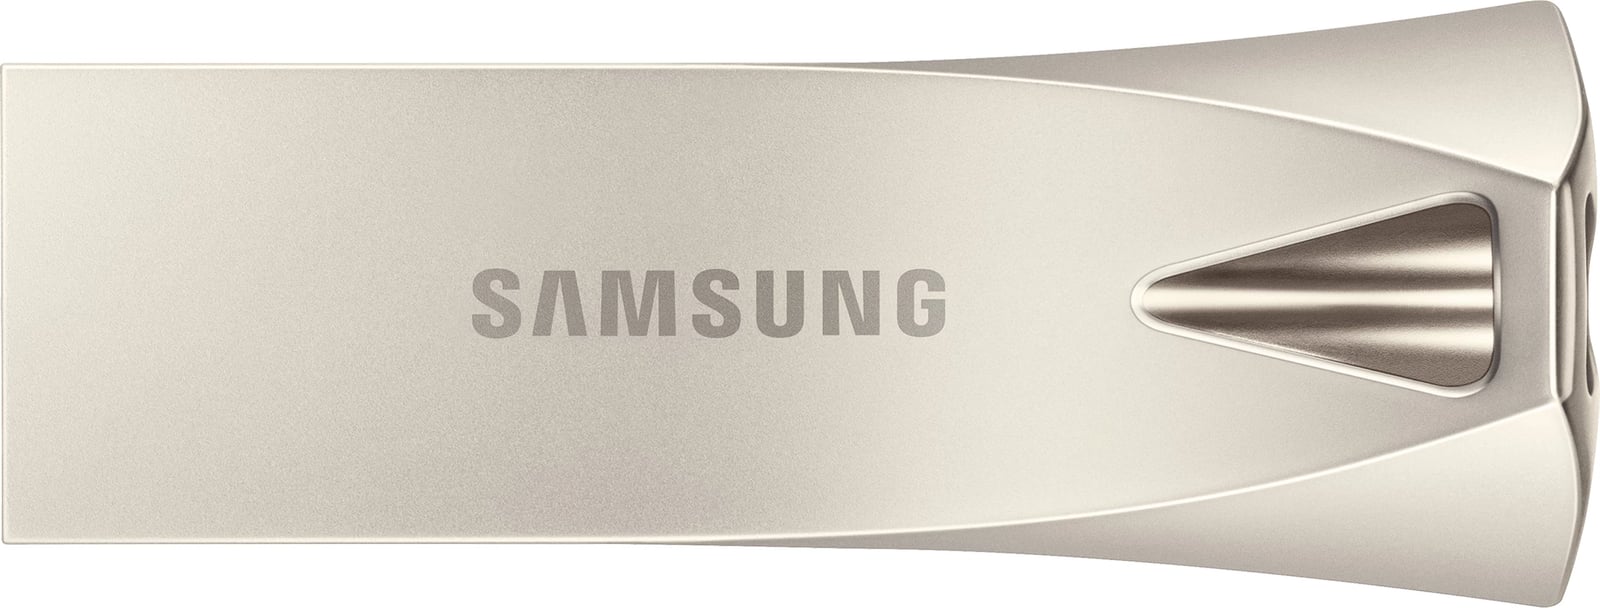 USB Samsung MUF-256BE, 256 GB, USB TYPE-A, argjend